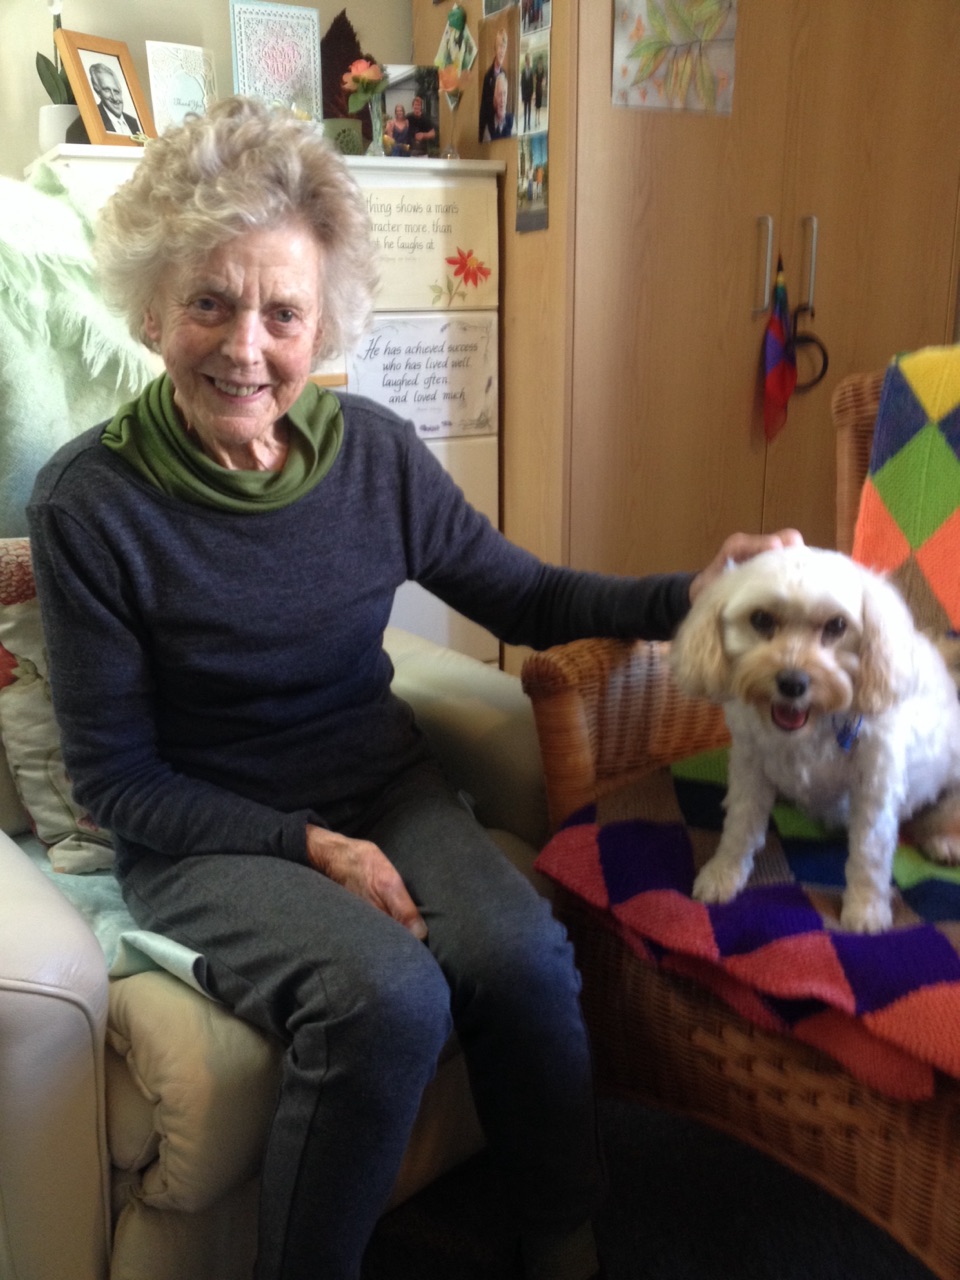 Bronwyn's mum and dog